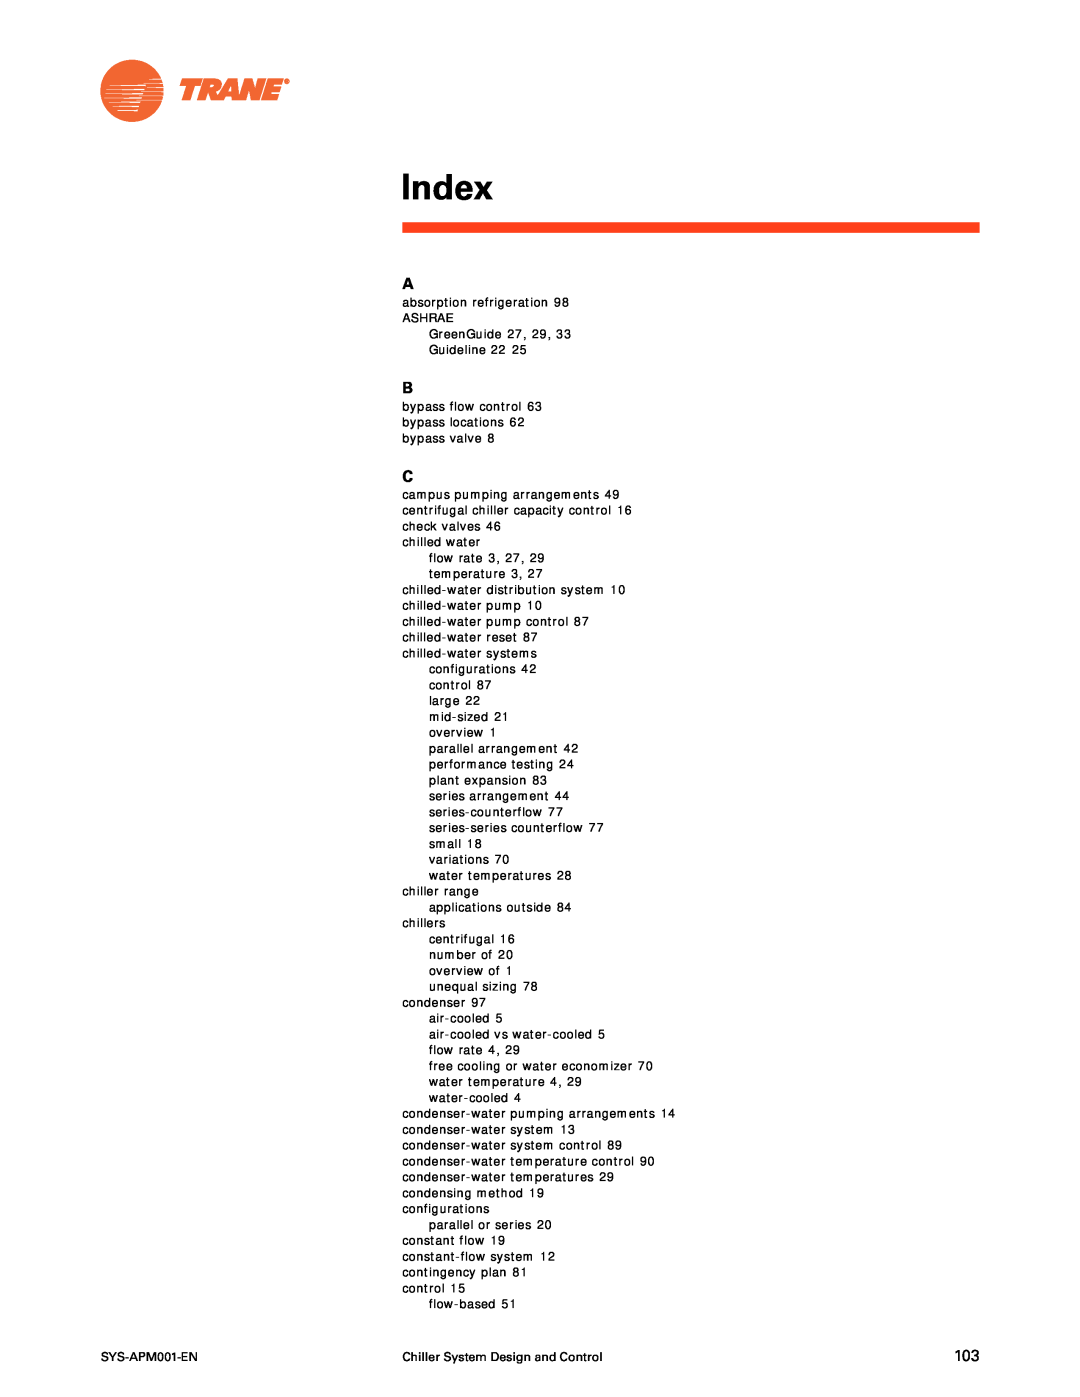 Trane SYS-APM001-EN manual Index 